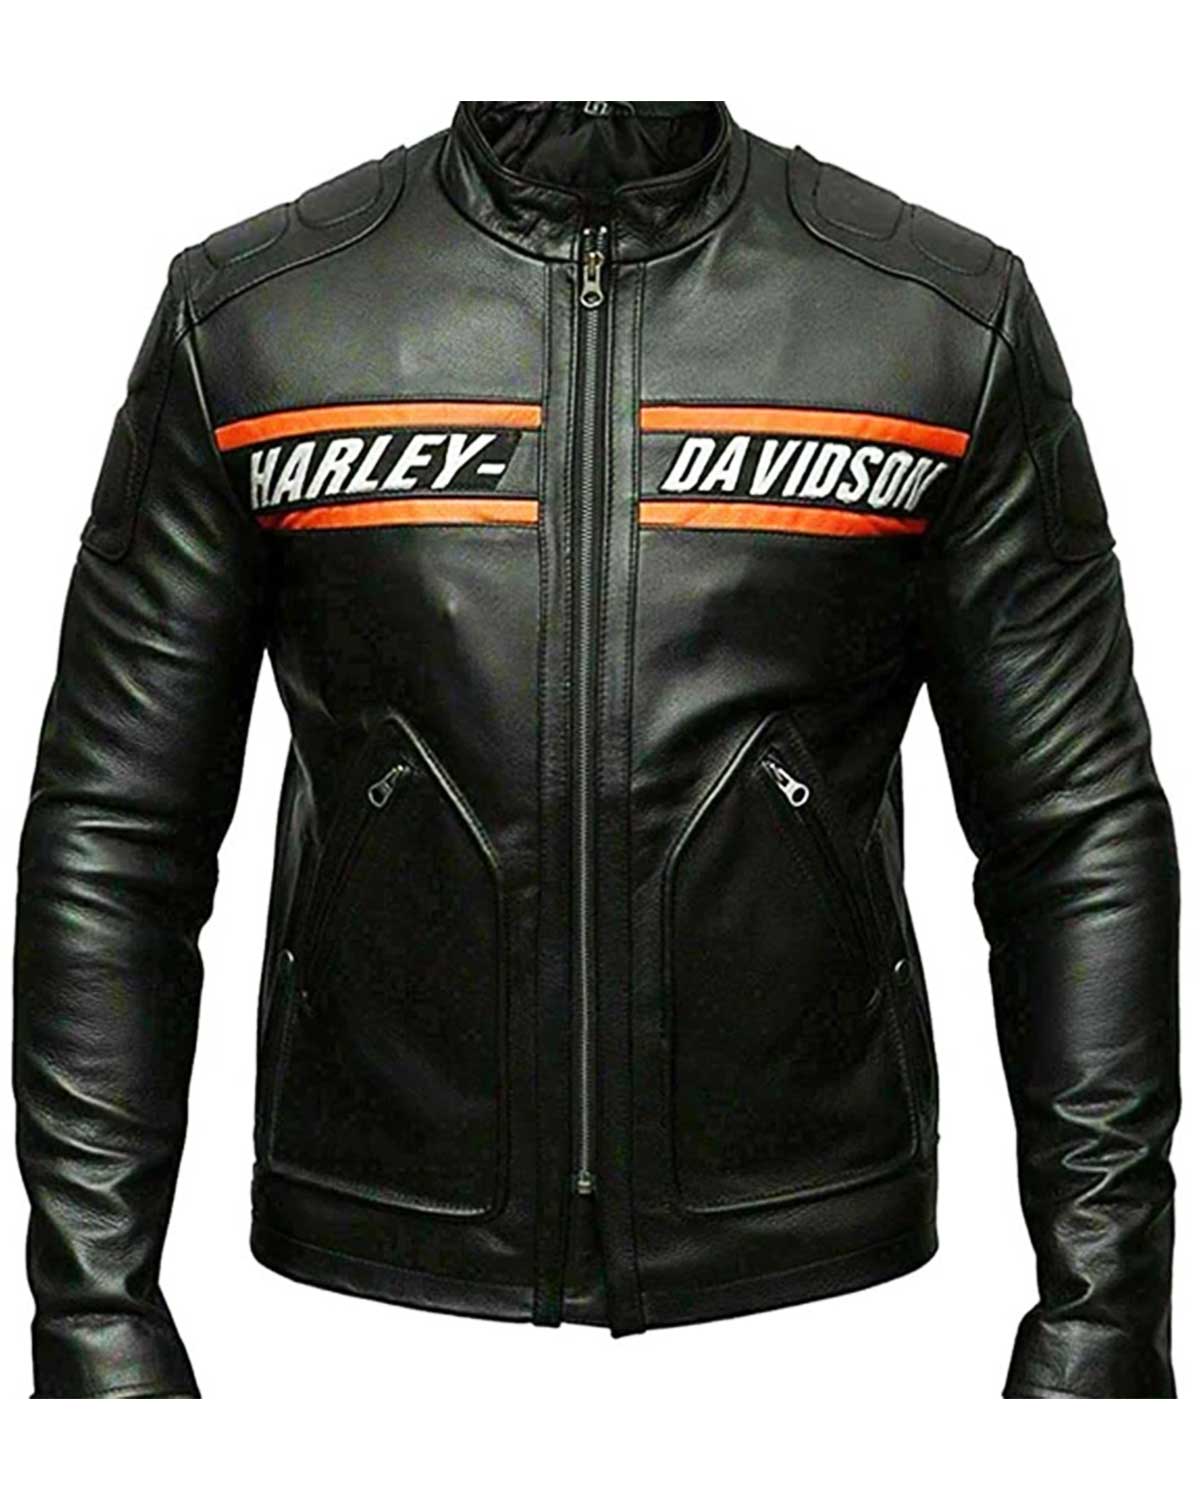 MotorCycleJackets Bill Goldberg WWE Black Harley Davidson Biker Leather Jacket